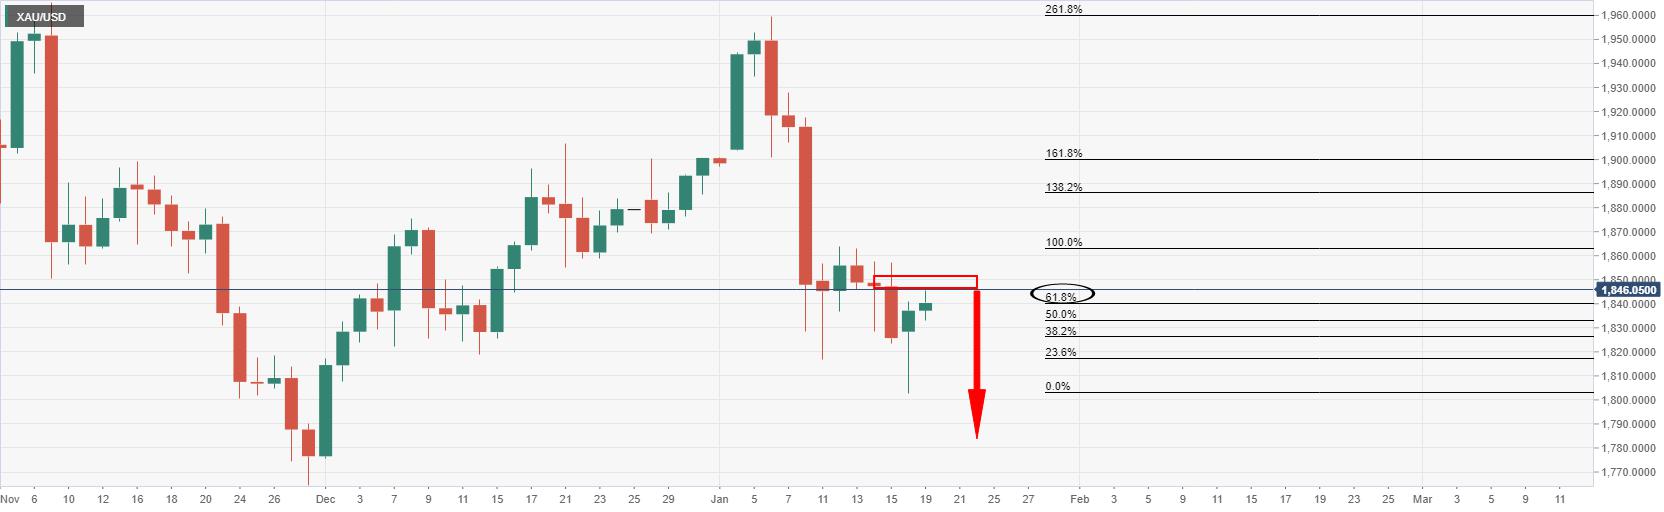 Gold Price Analysis: XAU/USD bulls attempting to correct the bearish impulse